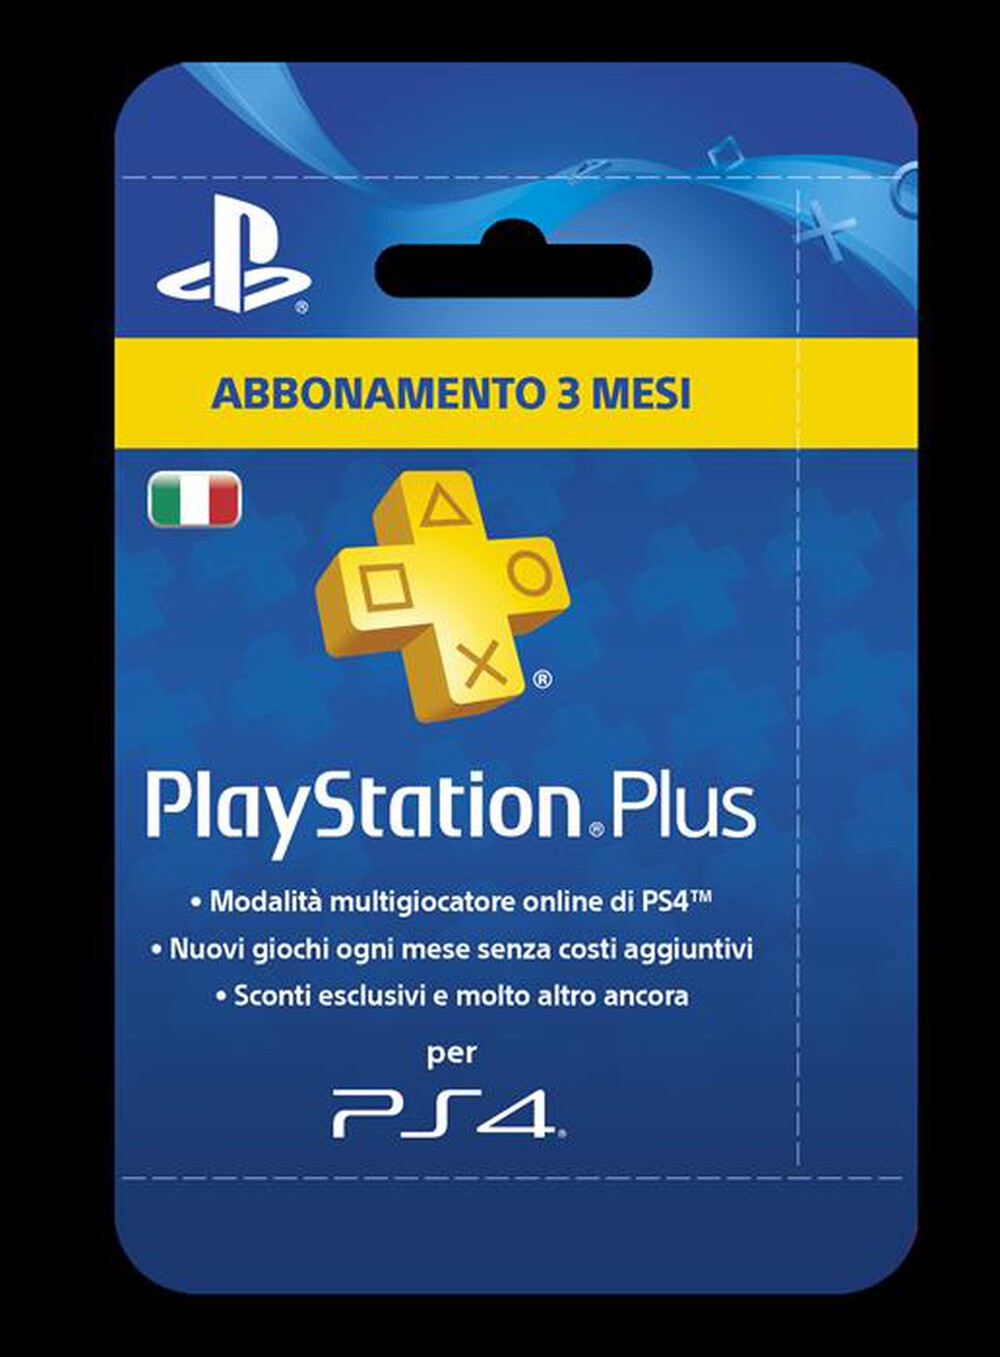 "SONY COMPUTER - PlayStation Plus Card 3 Mesi"